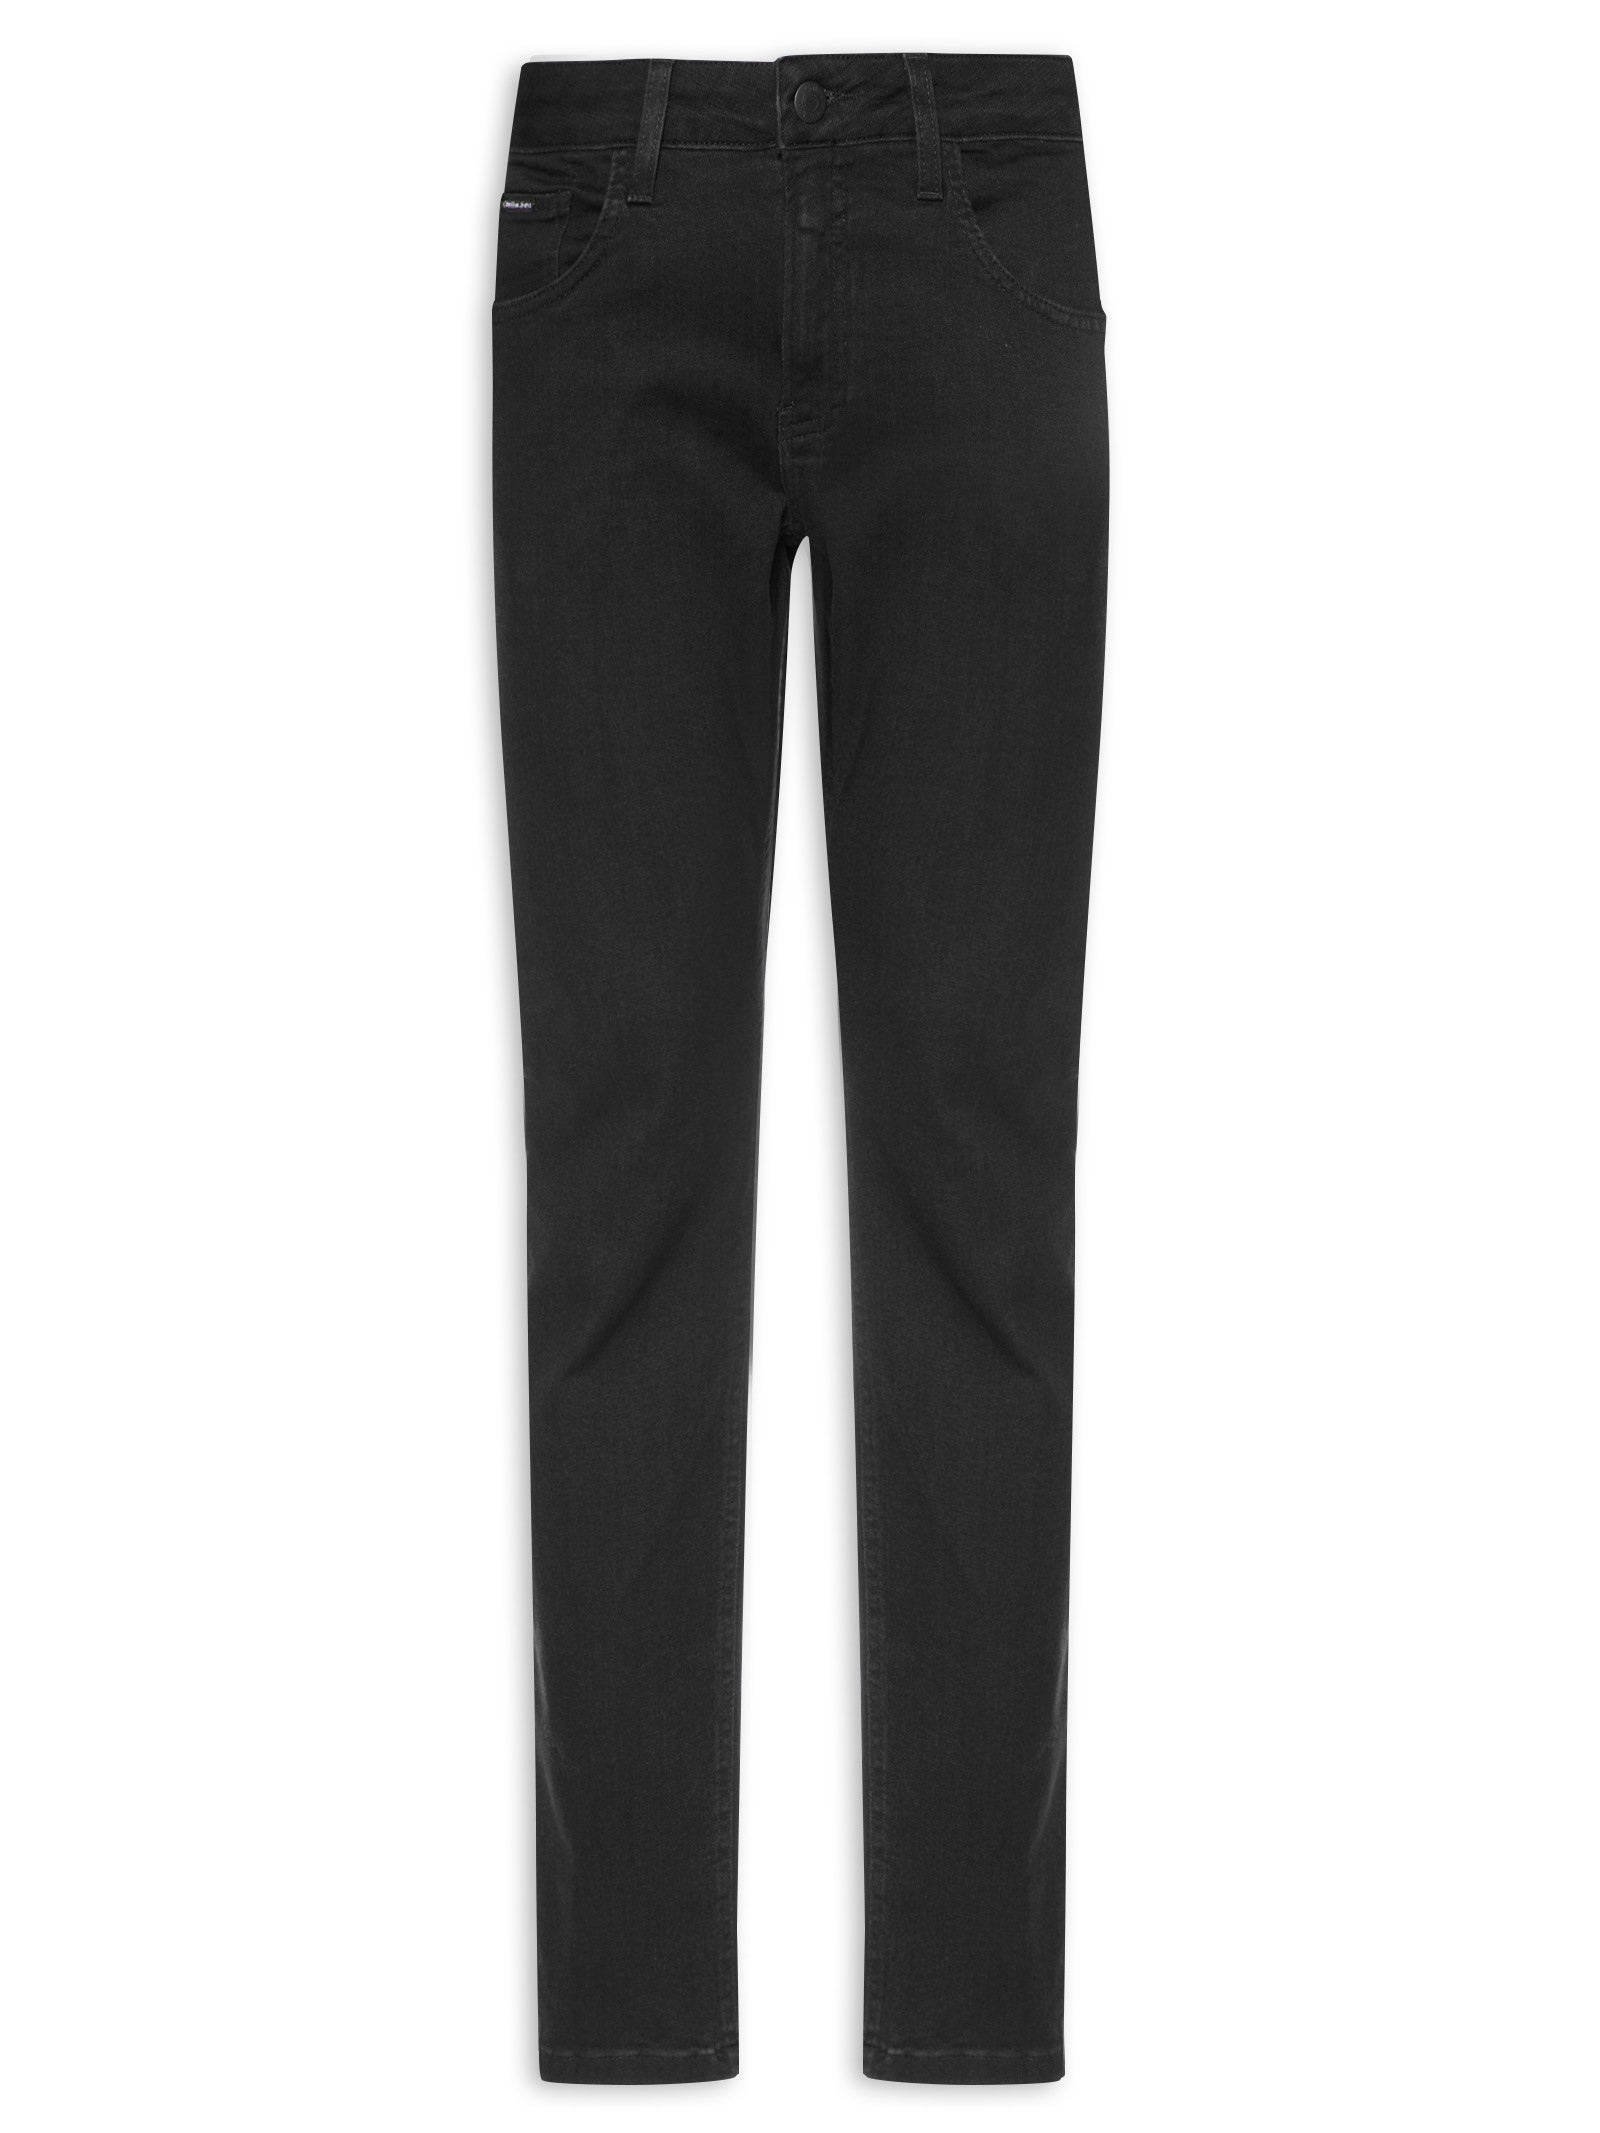 Calça Masculina Sarja Skinny 5 Pockets - Calvin Klein Jeans - Preto -  Oqvestir